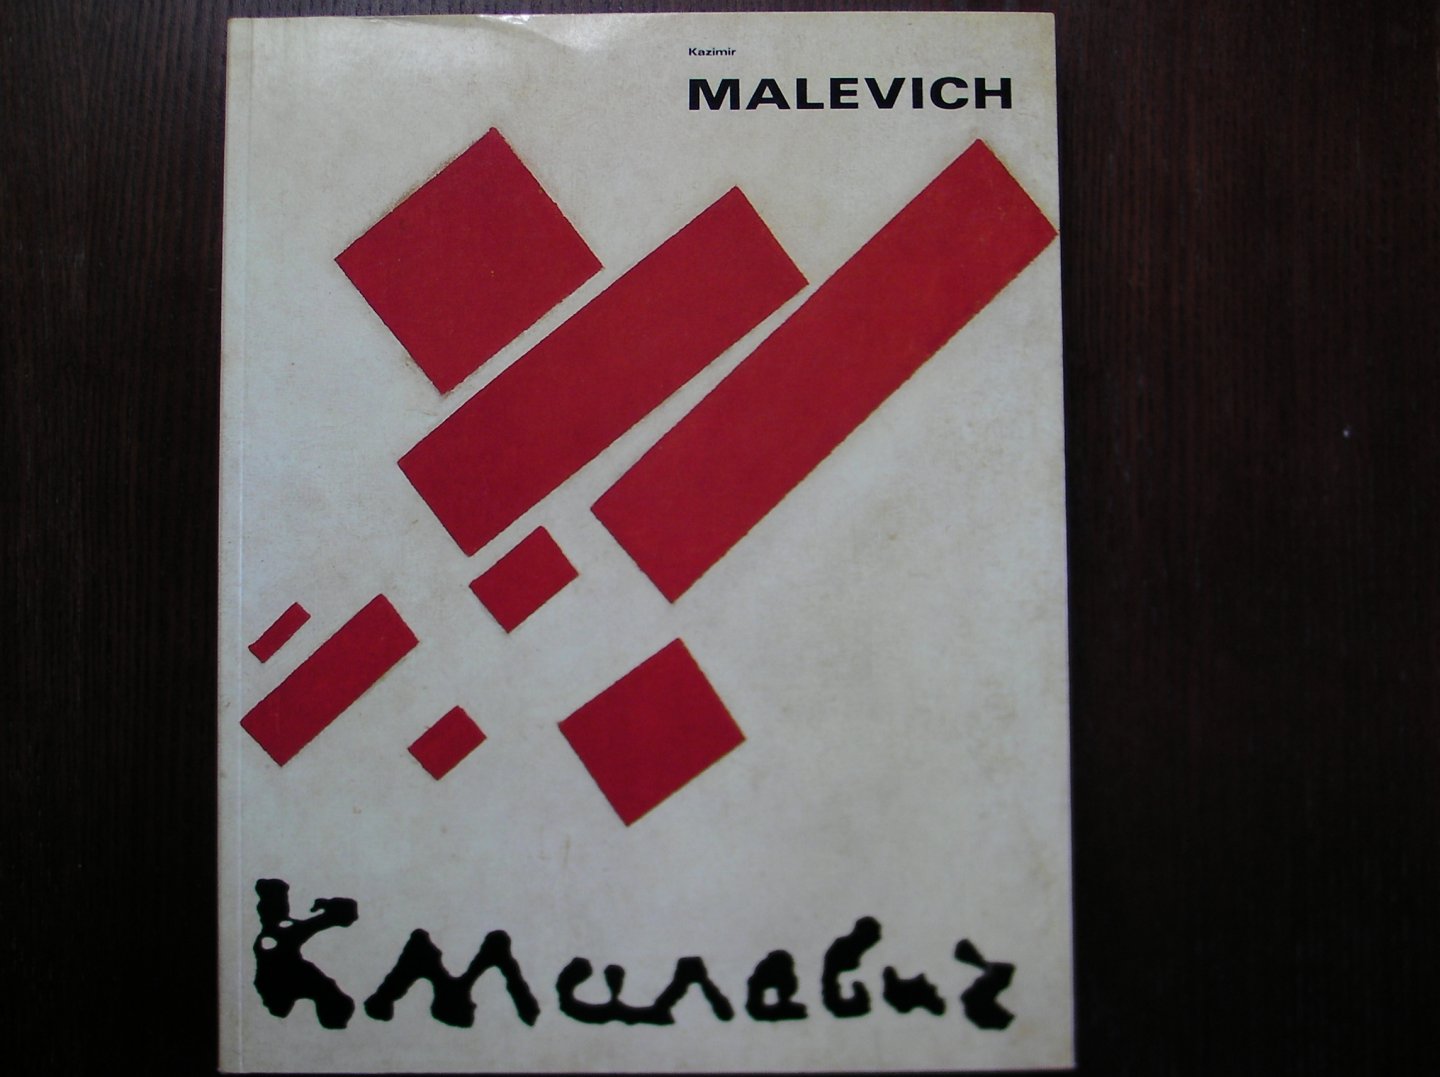  - Malevich